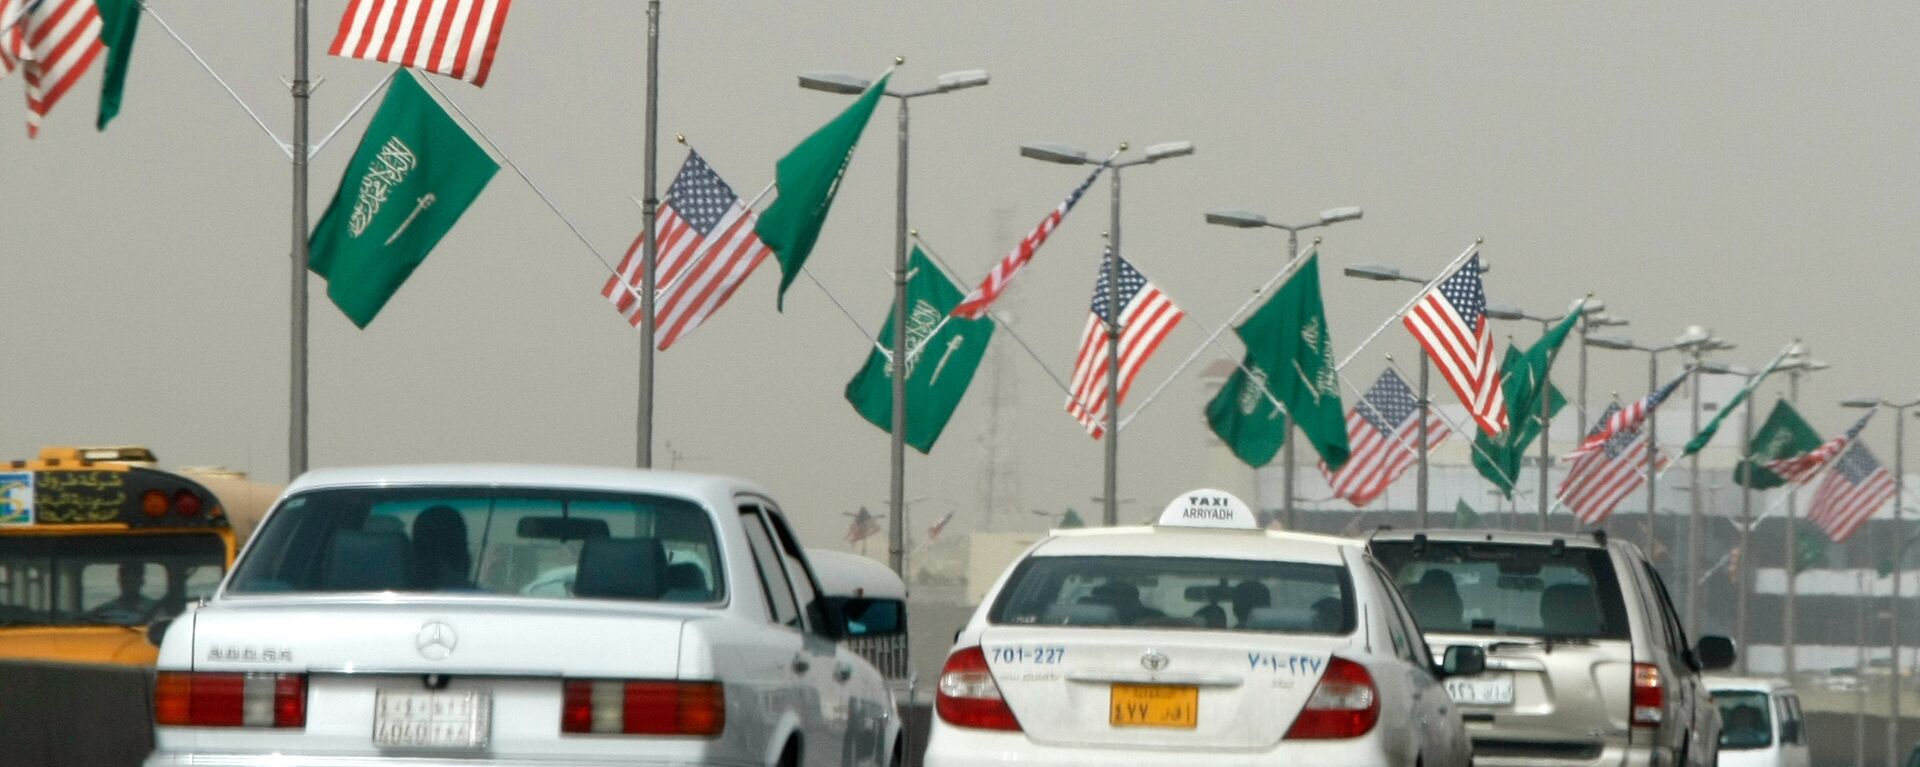 US and Saudi flags flutter on a main road in the Saudi capital Riyadh (File) - Sputnik International, 1920, 09.03.2022